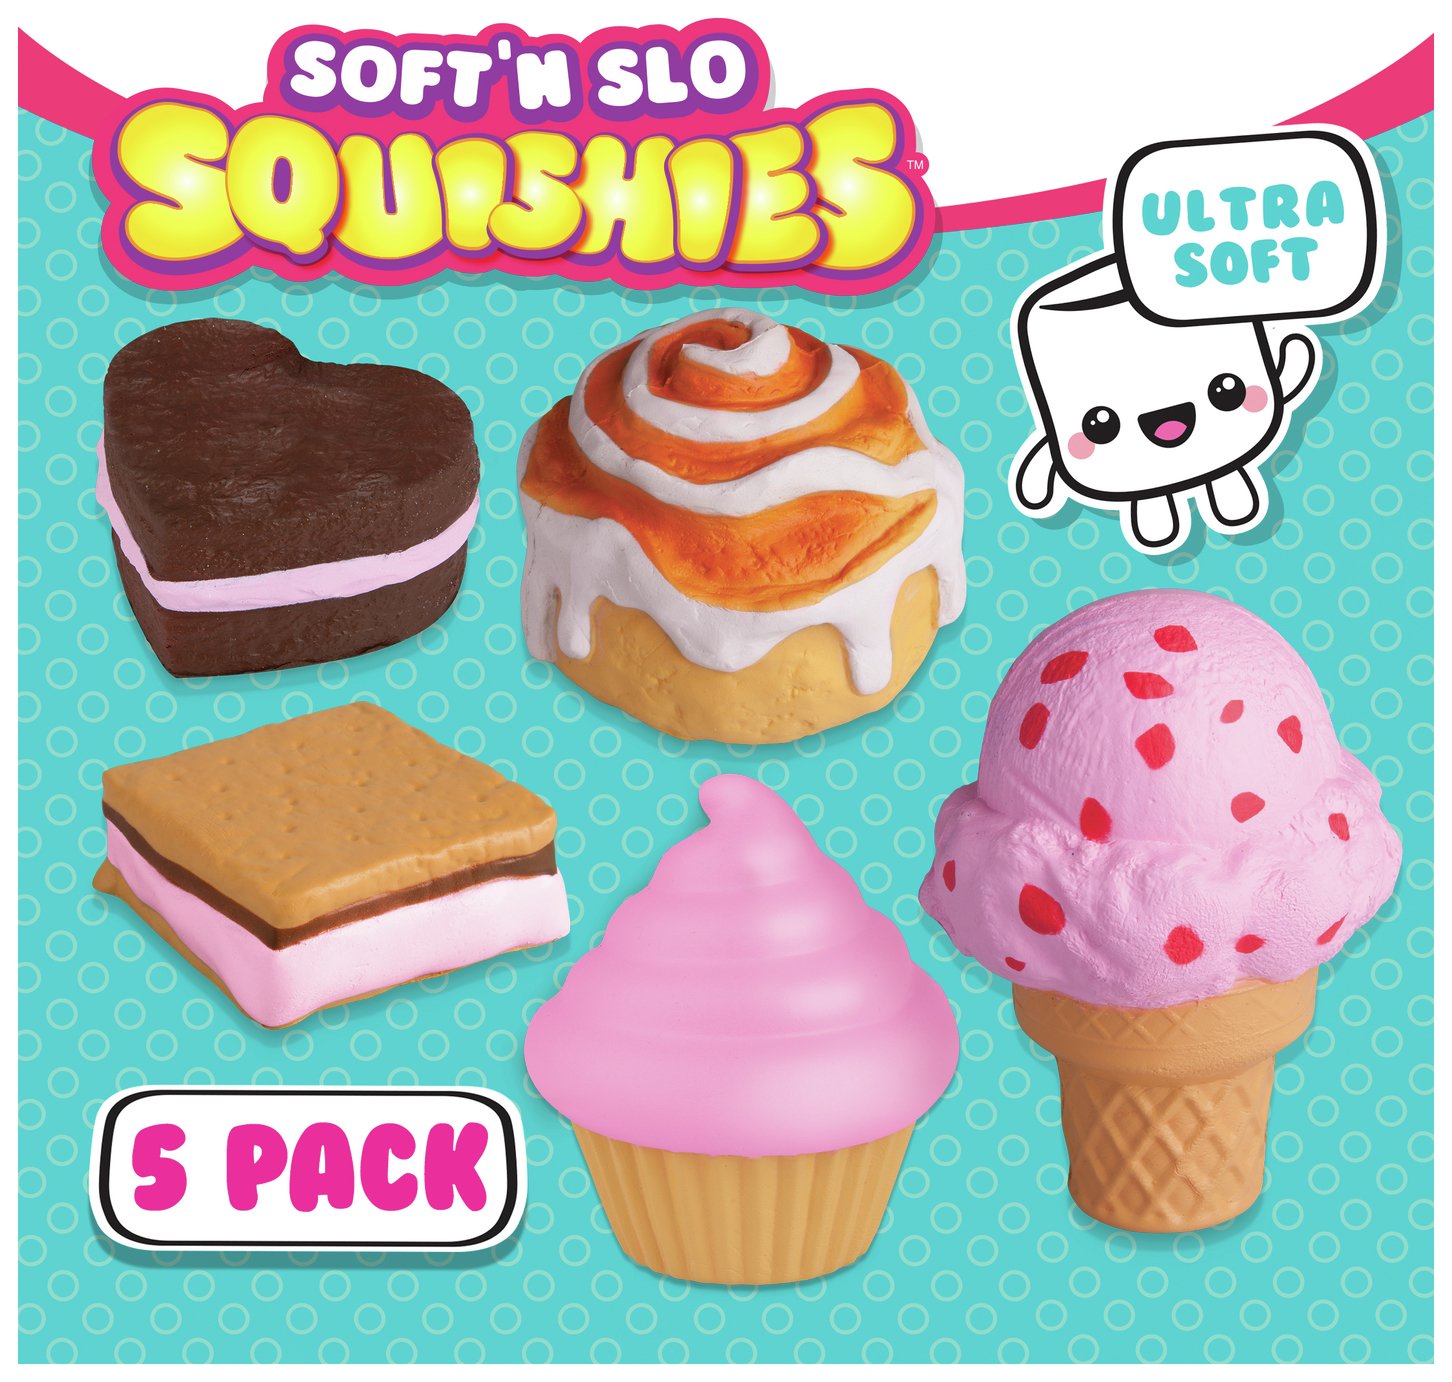 Soft n Slo Squishies - 5 Pack (8558310 